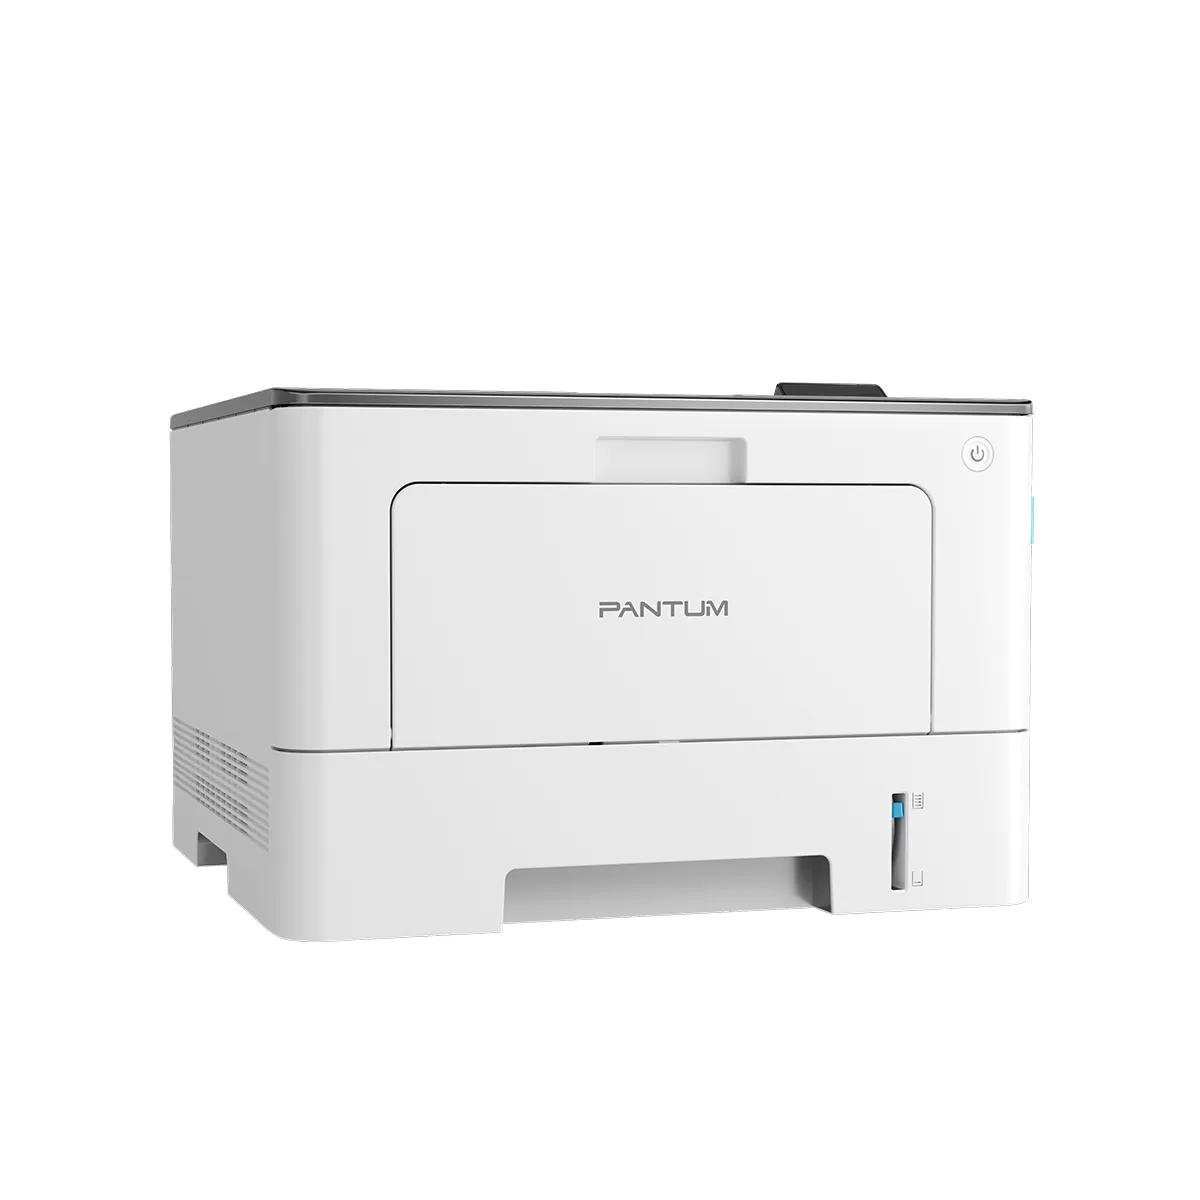 Pantum BP5100DW Laser Printer